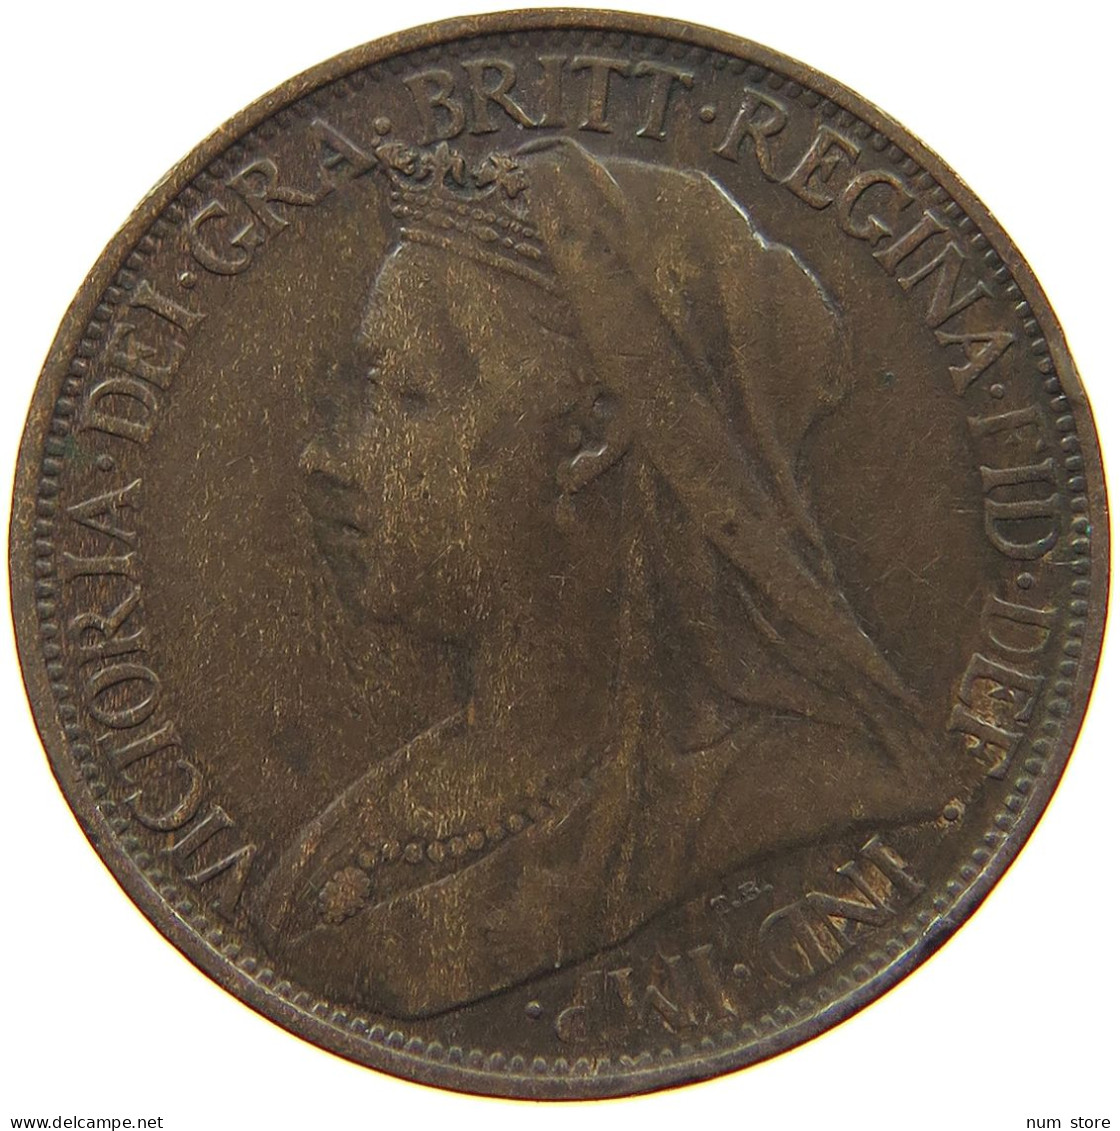 GREAT BRITAIN FARTHING 1895 Victoria 1837-1901 #t107 0173 - B. 1 Farthing